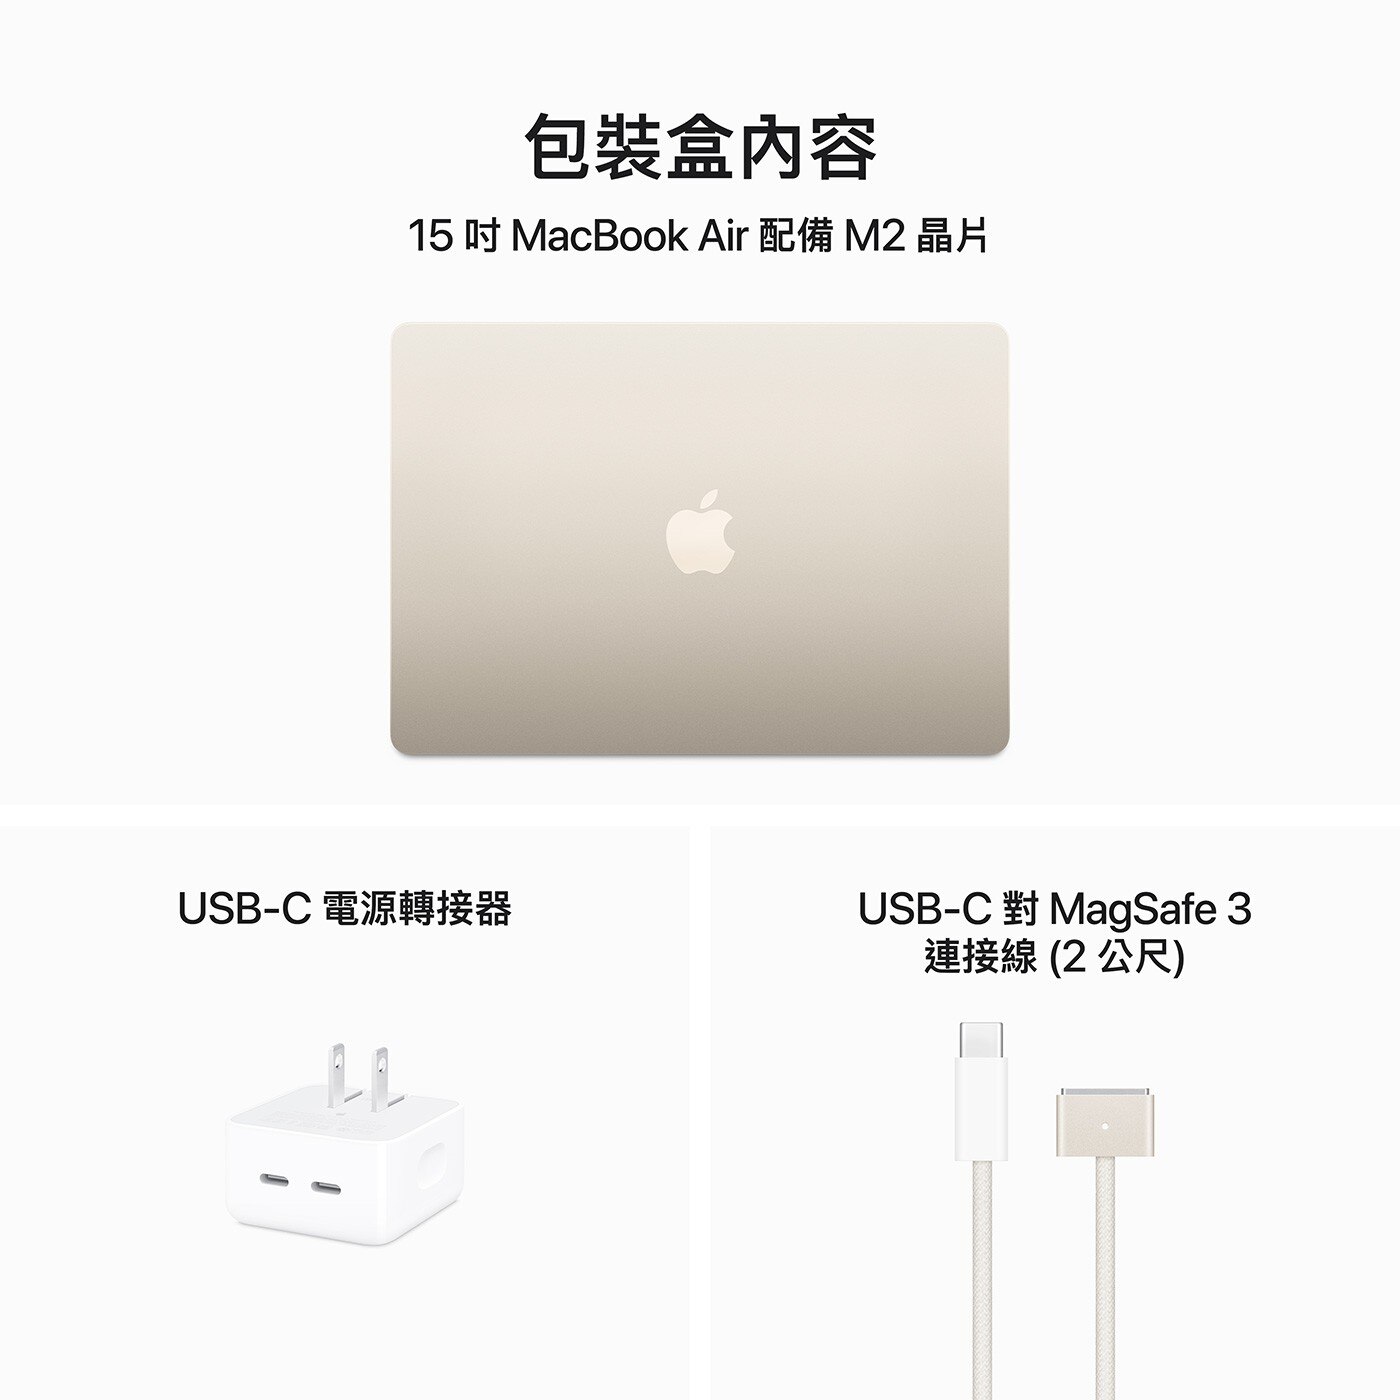 Apple MacBook Air 15吋配備M2晶片8核心CPU 10核心GPU 8GB 512GB 